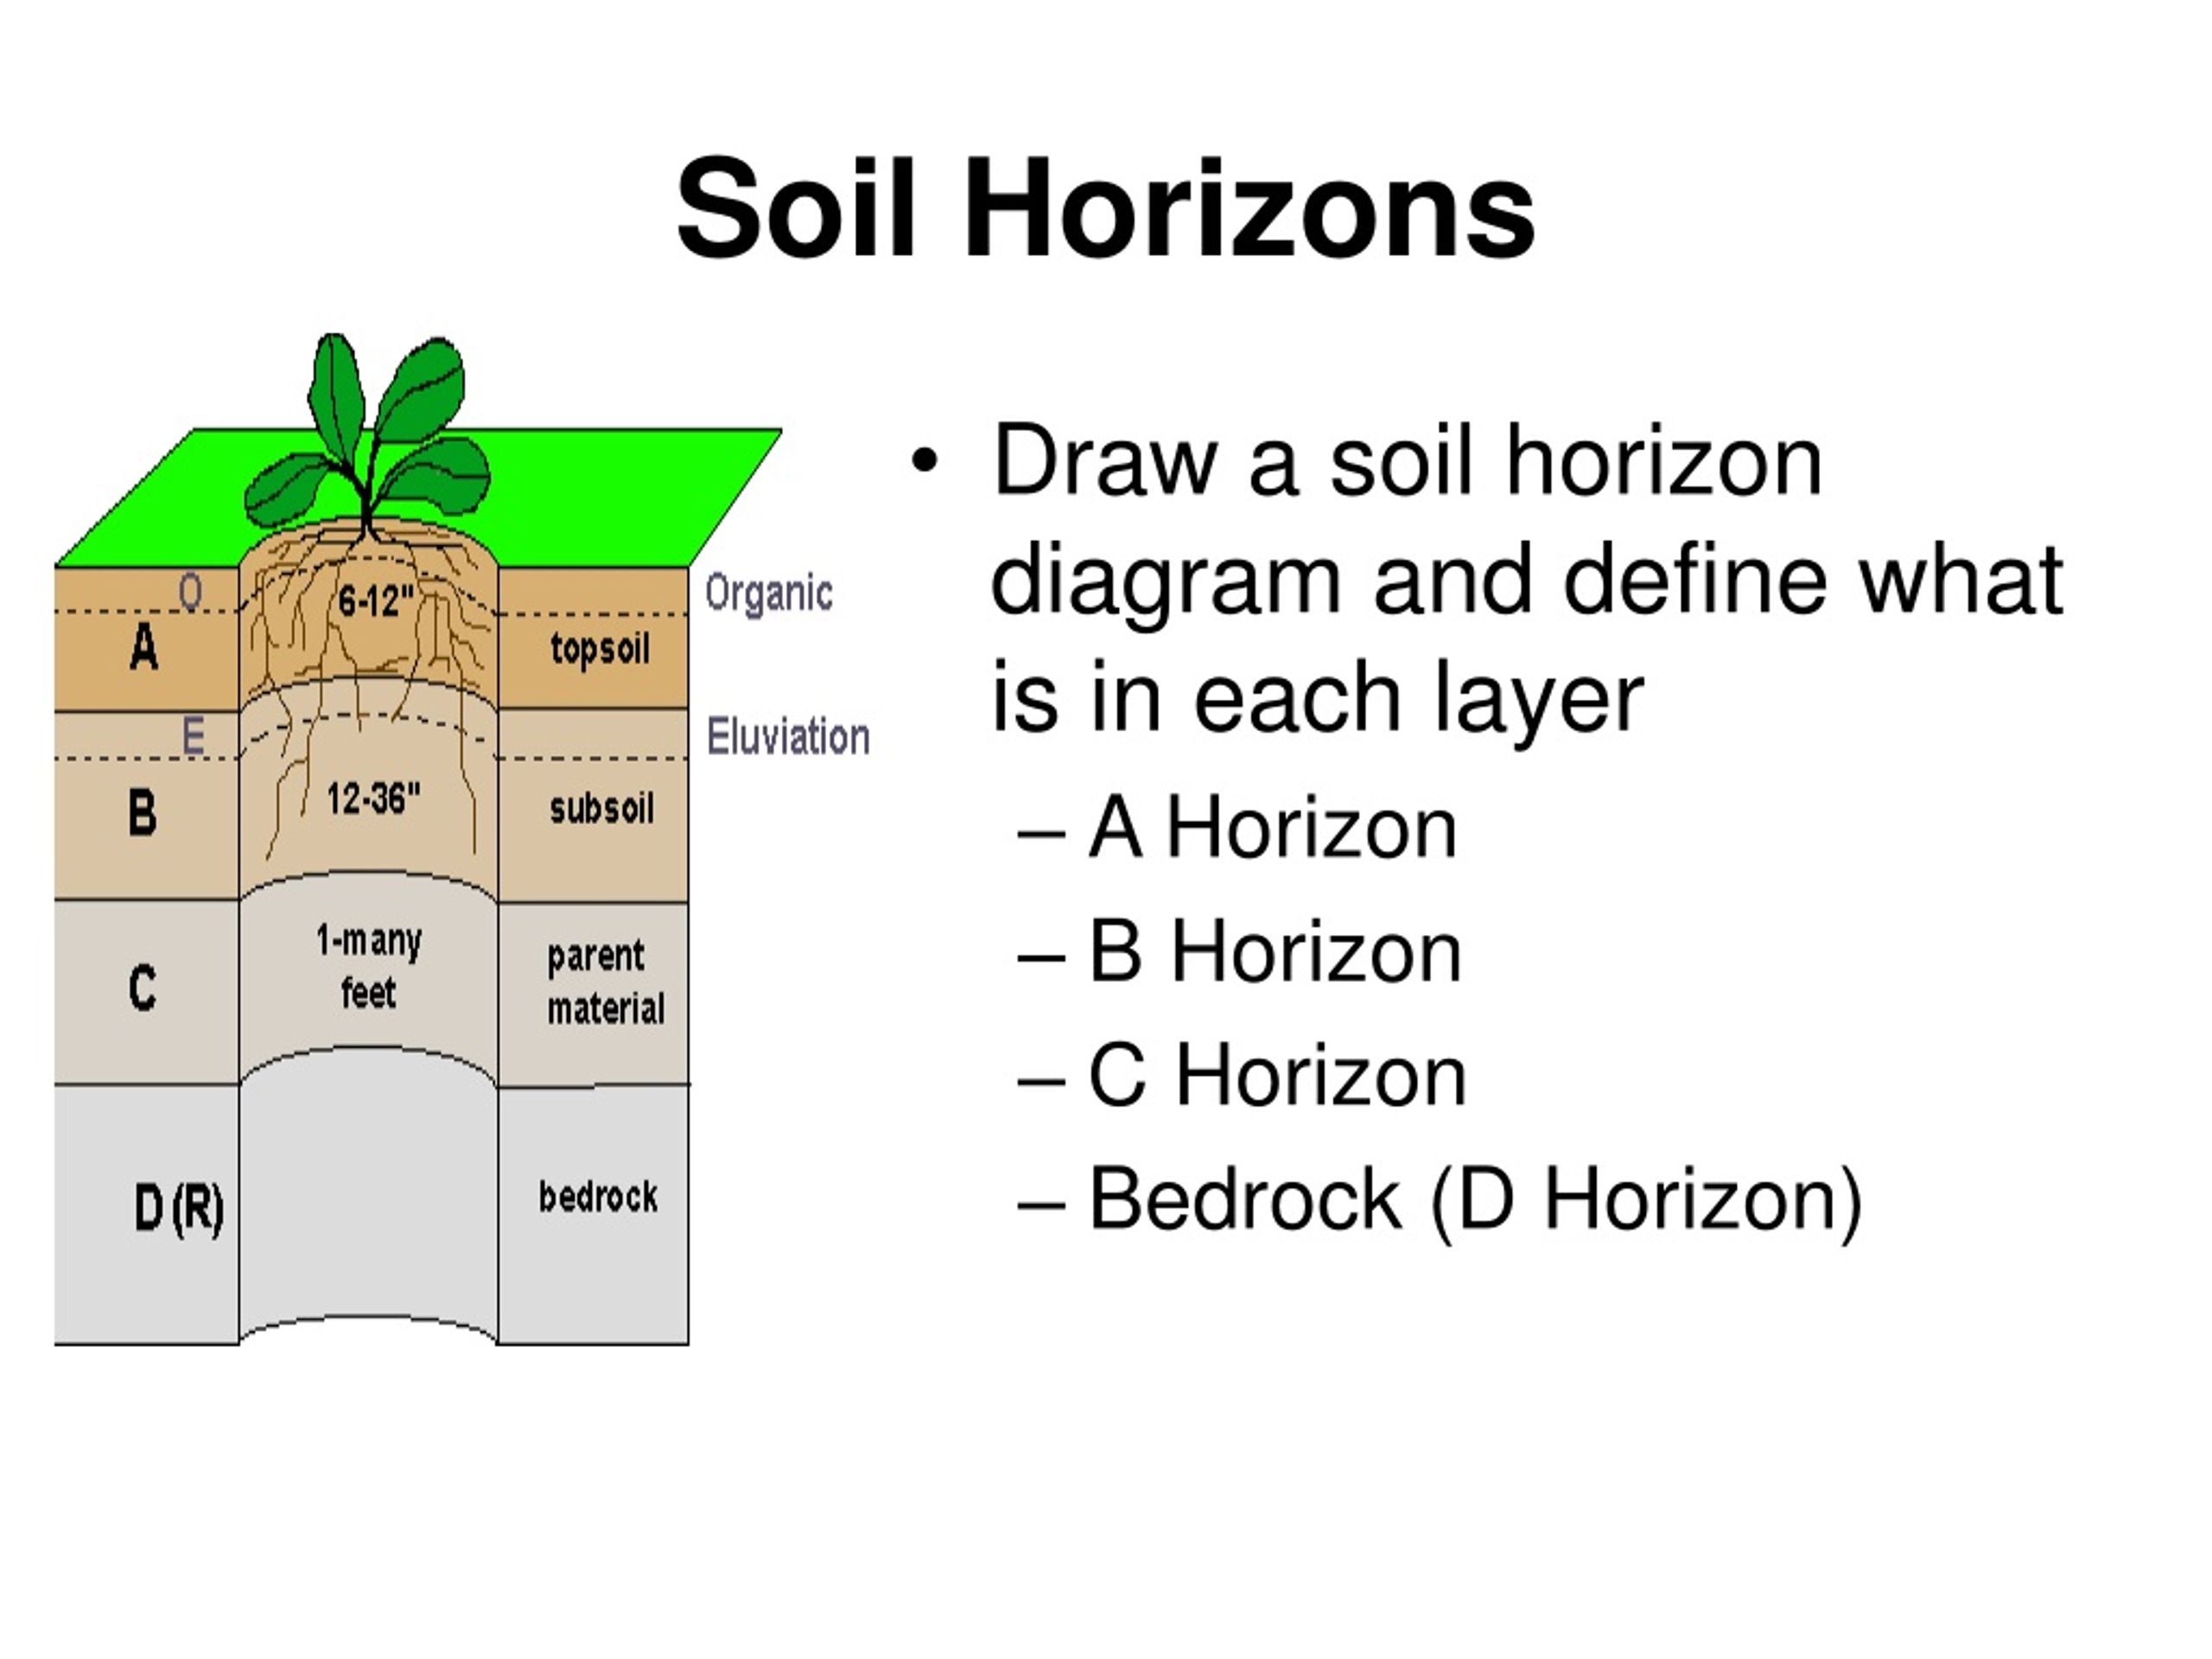 bt soil horizon definition